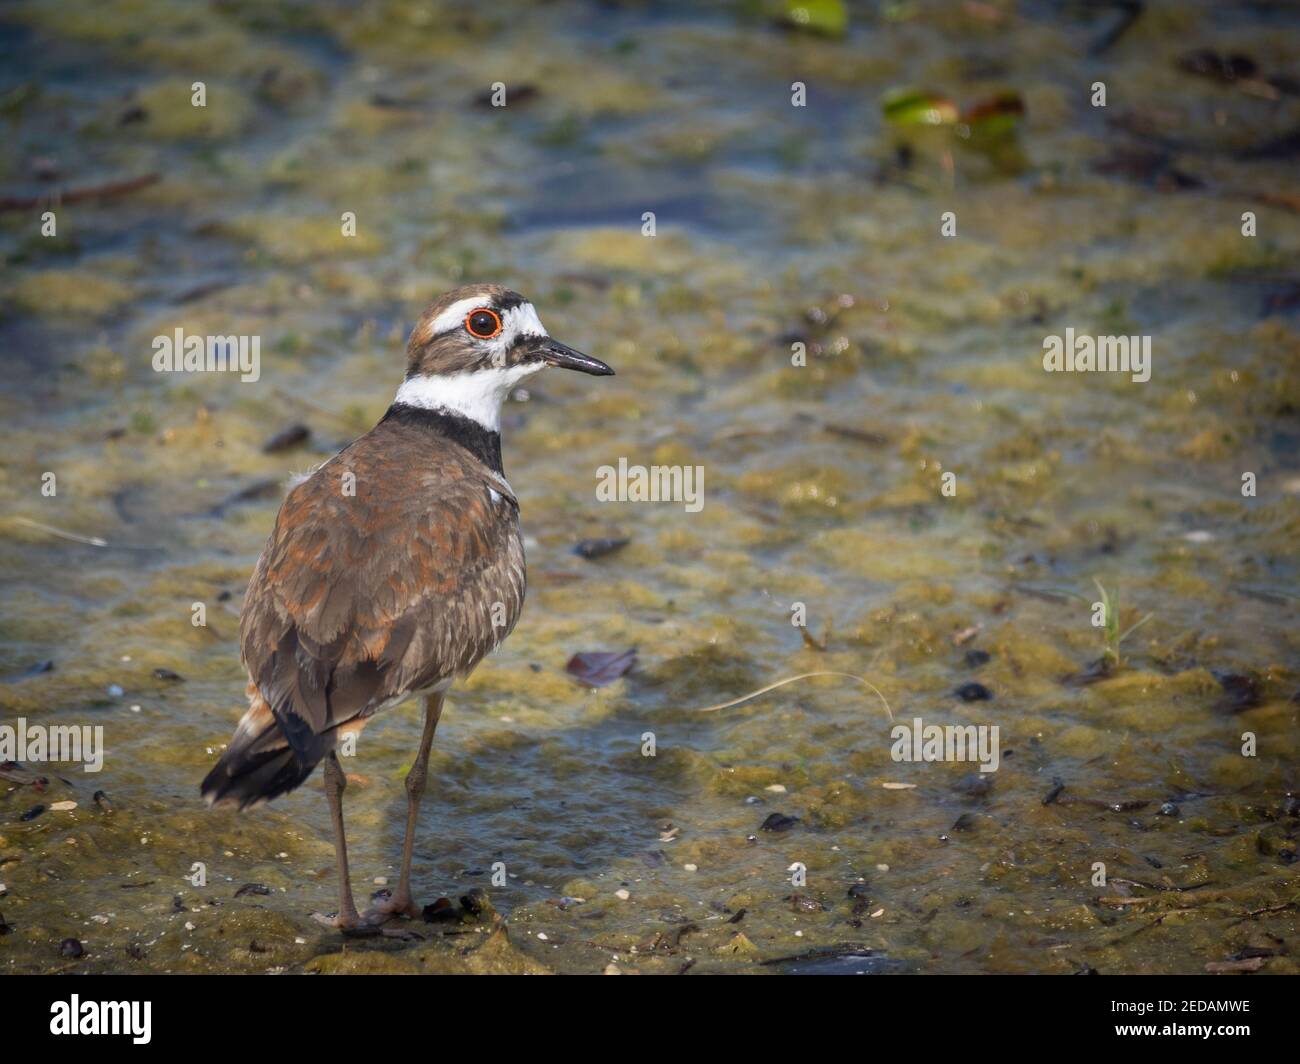 Killdeer bird in water eating Stock Photo